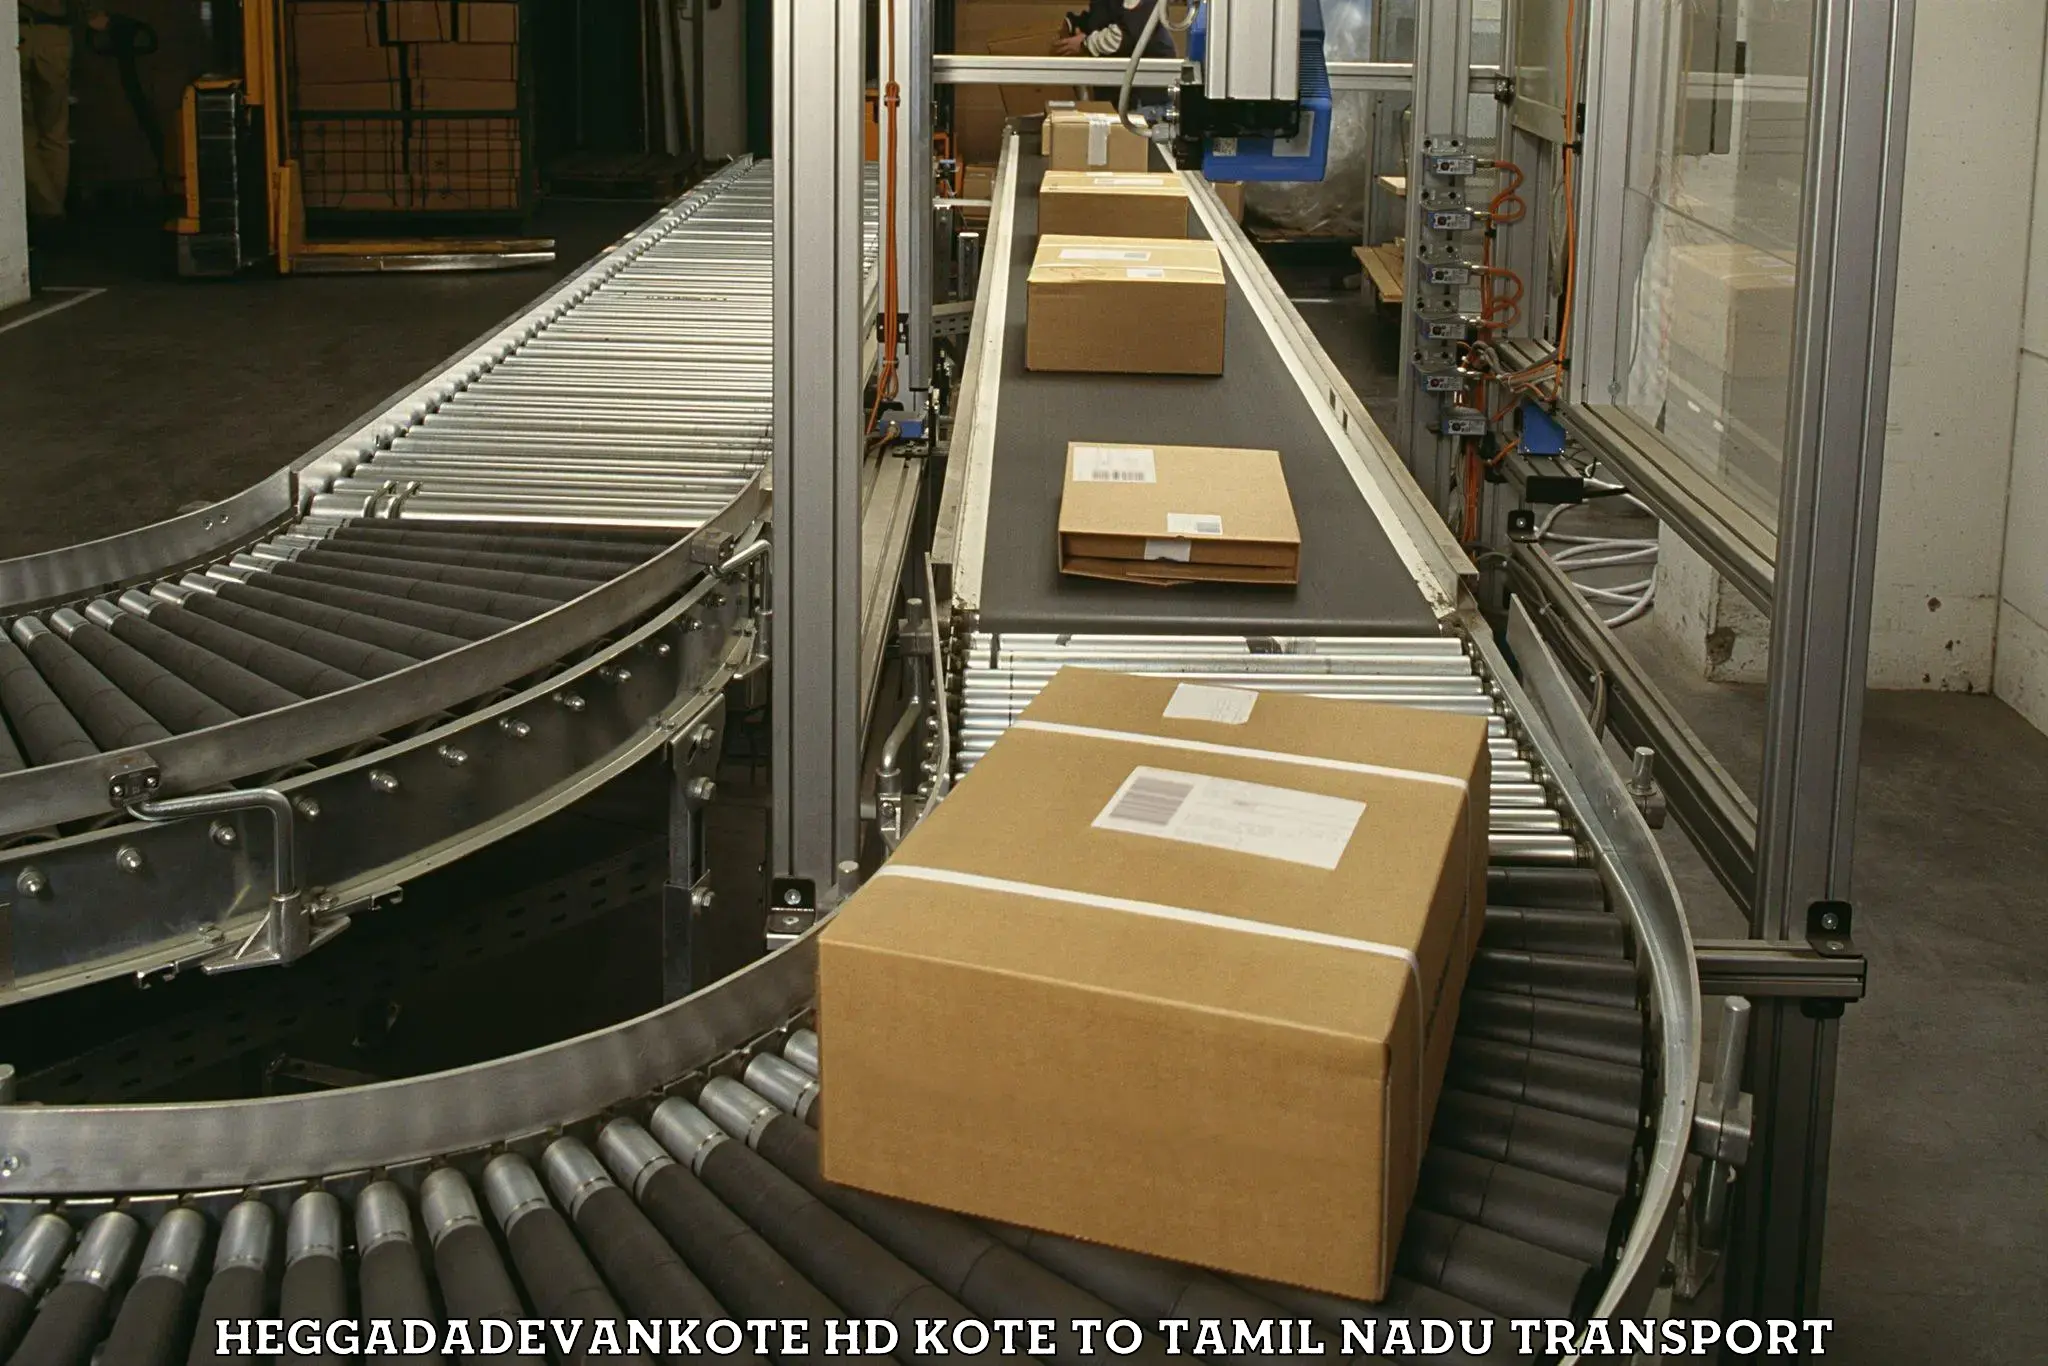 Logistics transportation services Heggadadevankote HD Kote to Pudukkottai